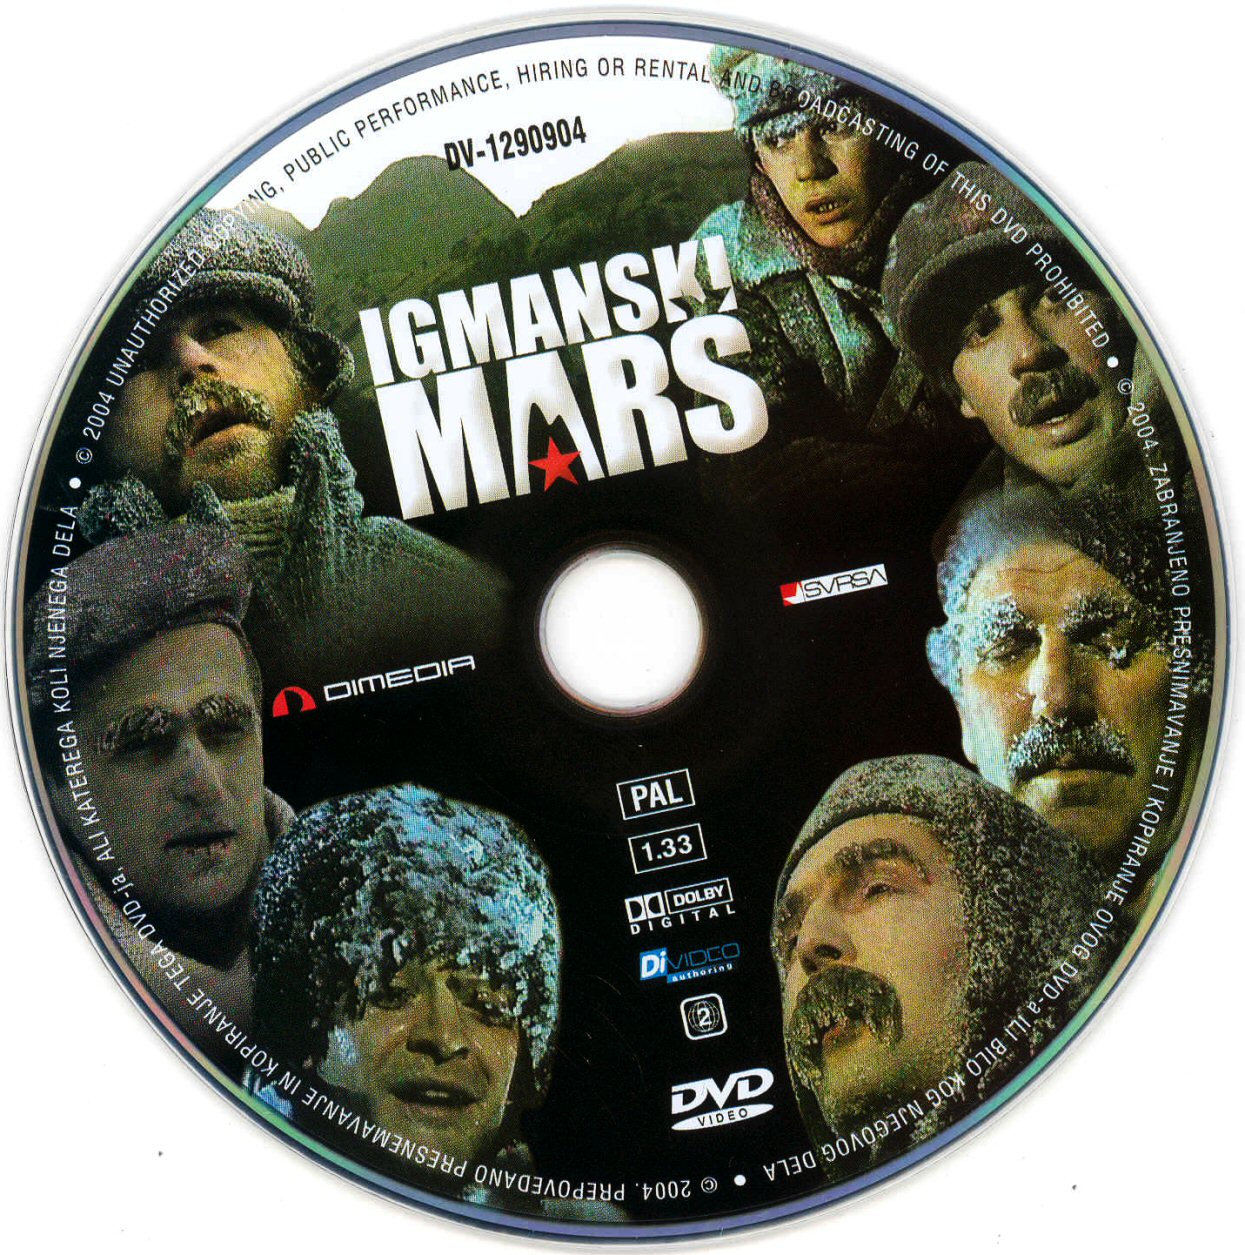 Click to view full size image -  DVD Cover - I - DVD - IGMASKI MARS - CD - DVD - IGMASKI MARS - CD.jpg